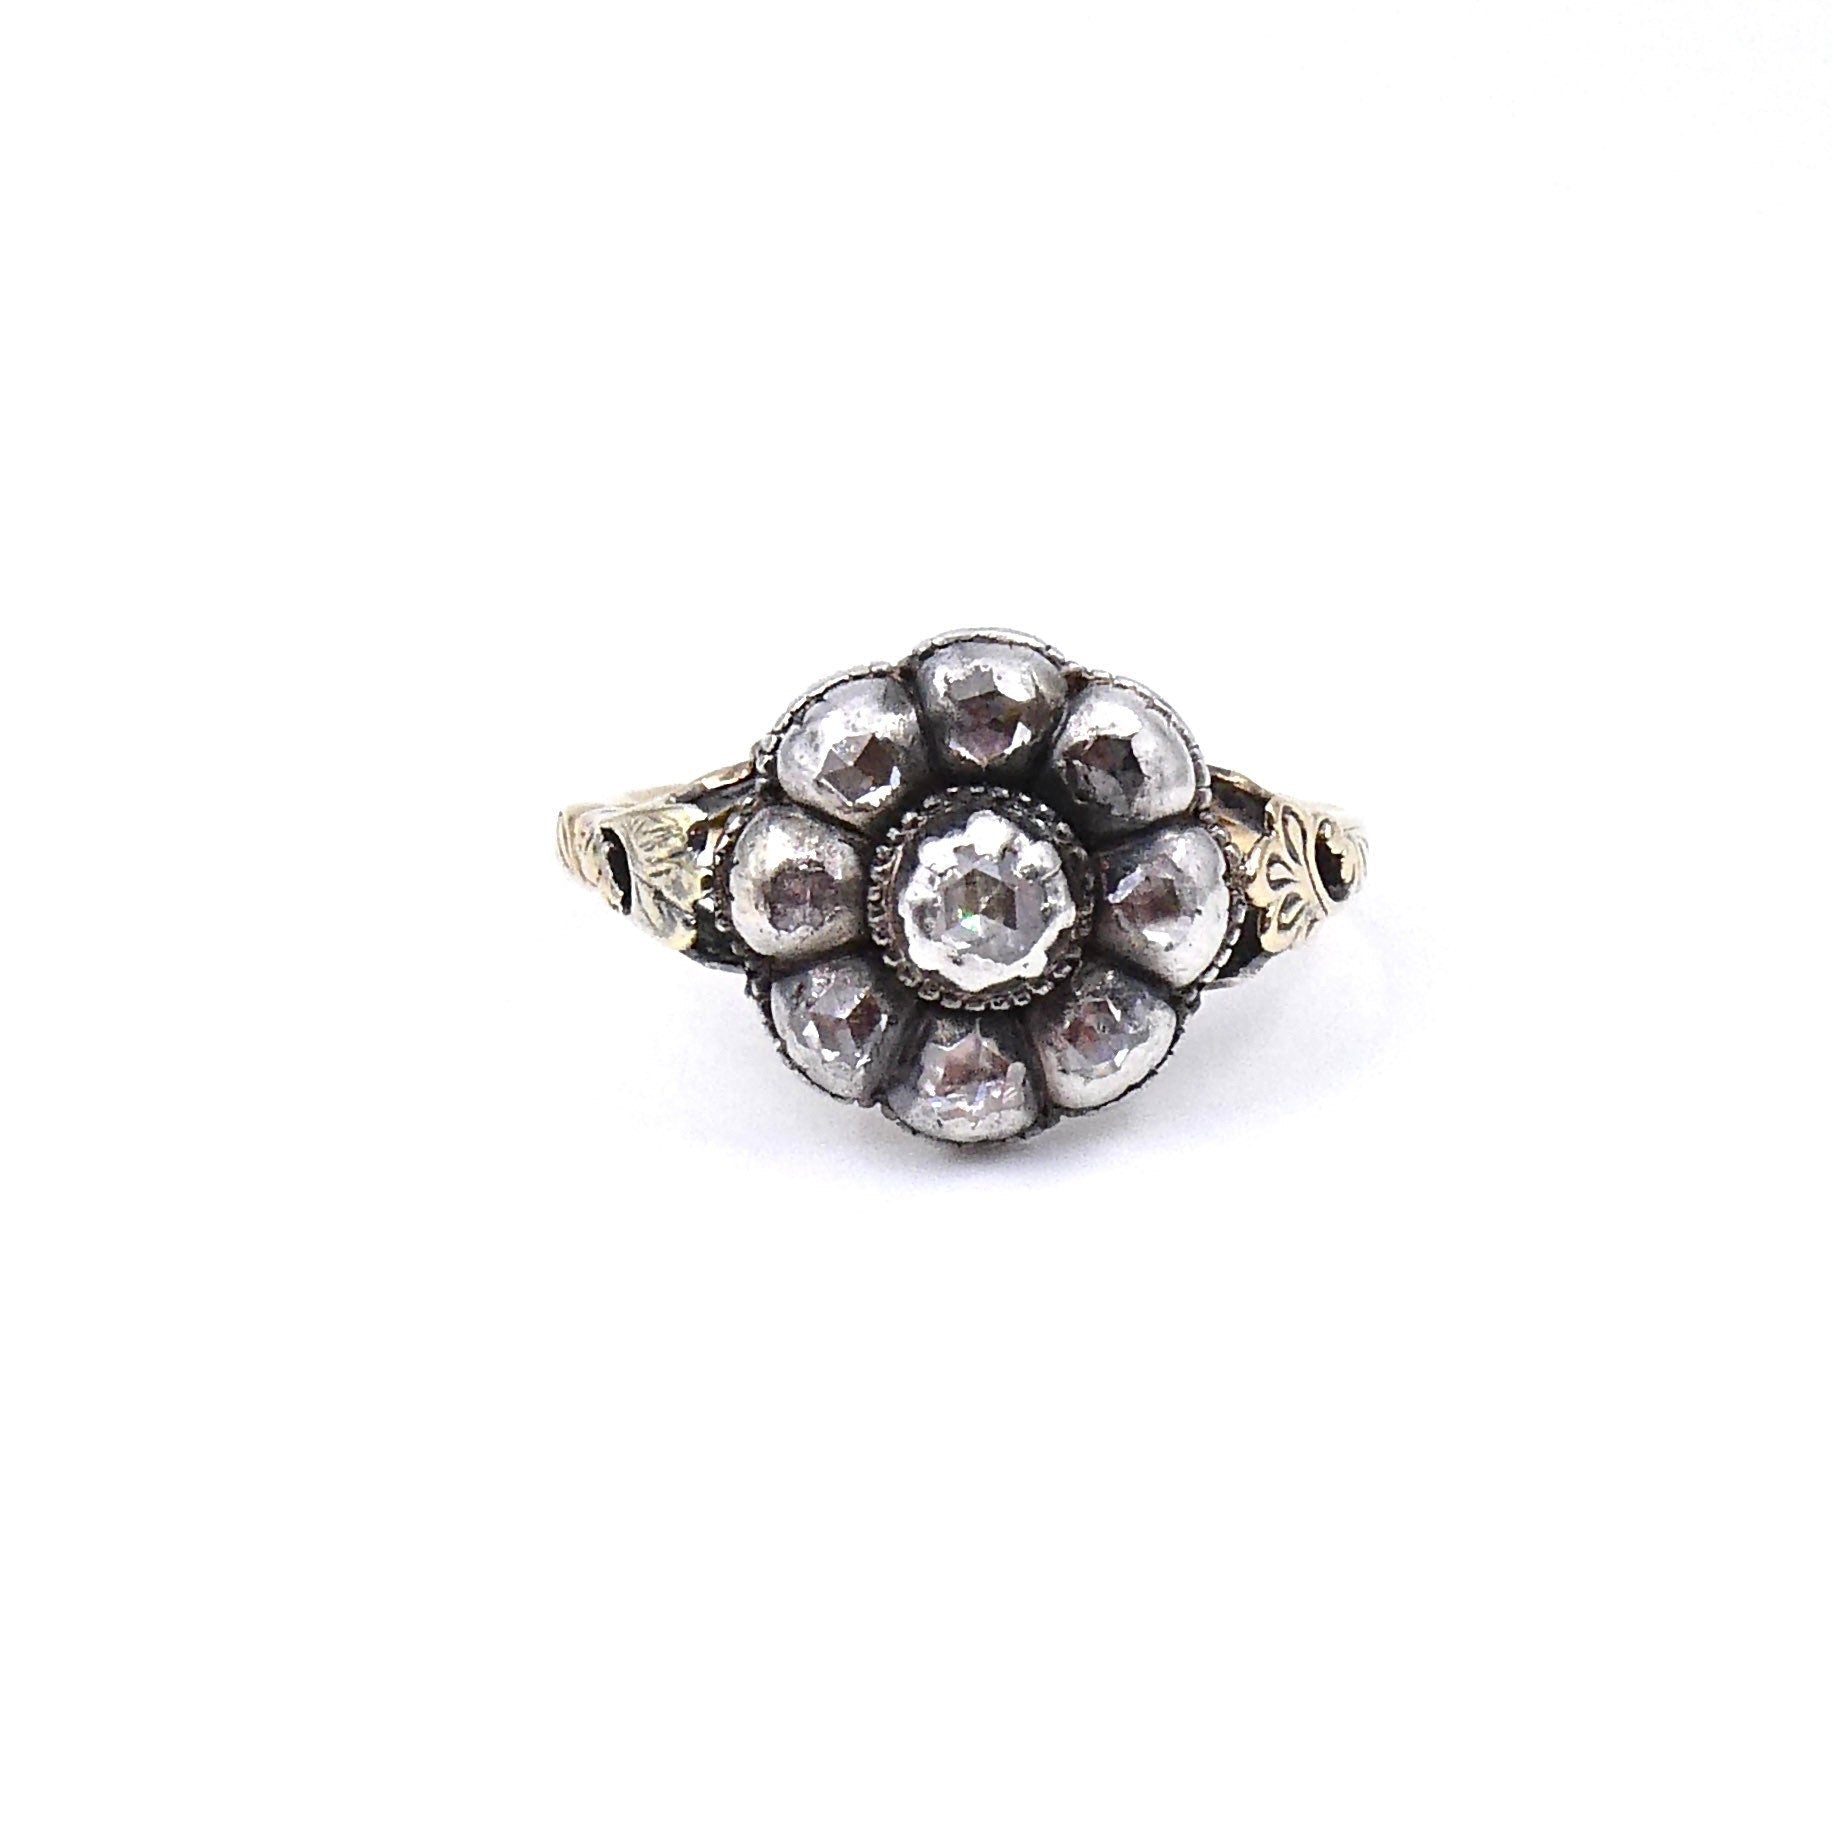 Georgian diamond ring, a beautiful diamond ring set with rose cut diamonds. - Collected